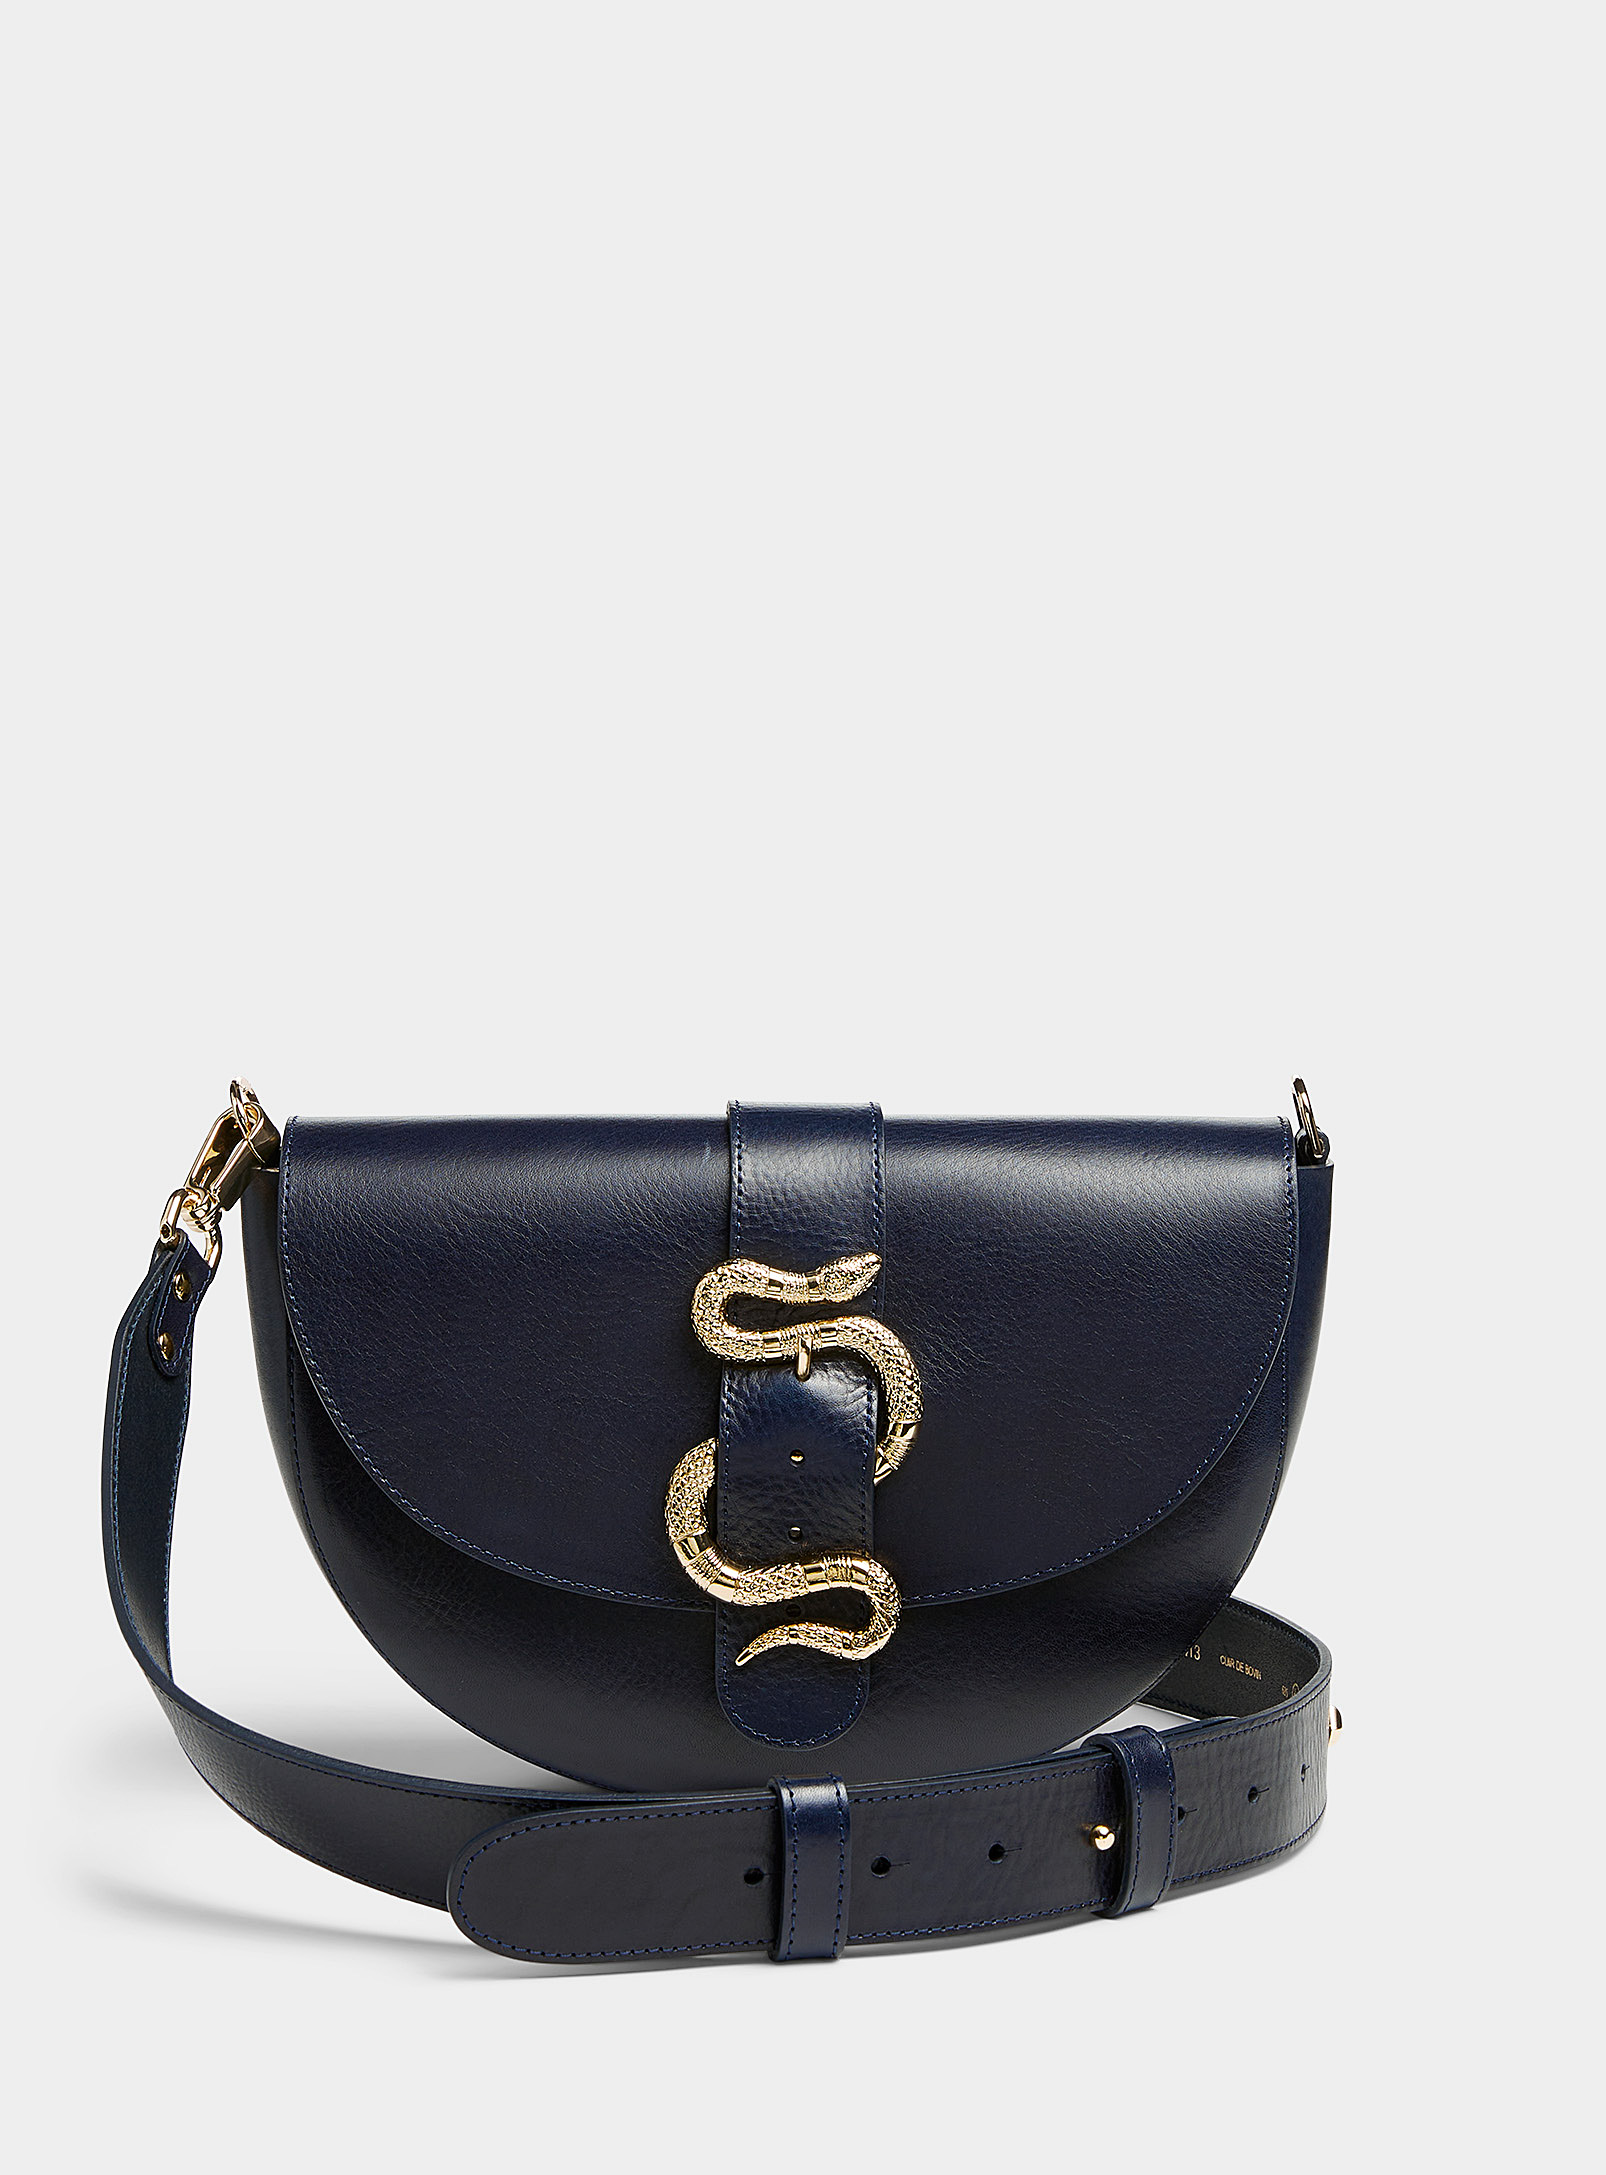 HERBERT Frère Soeur - Women's Gabie snake leather half-moon bag